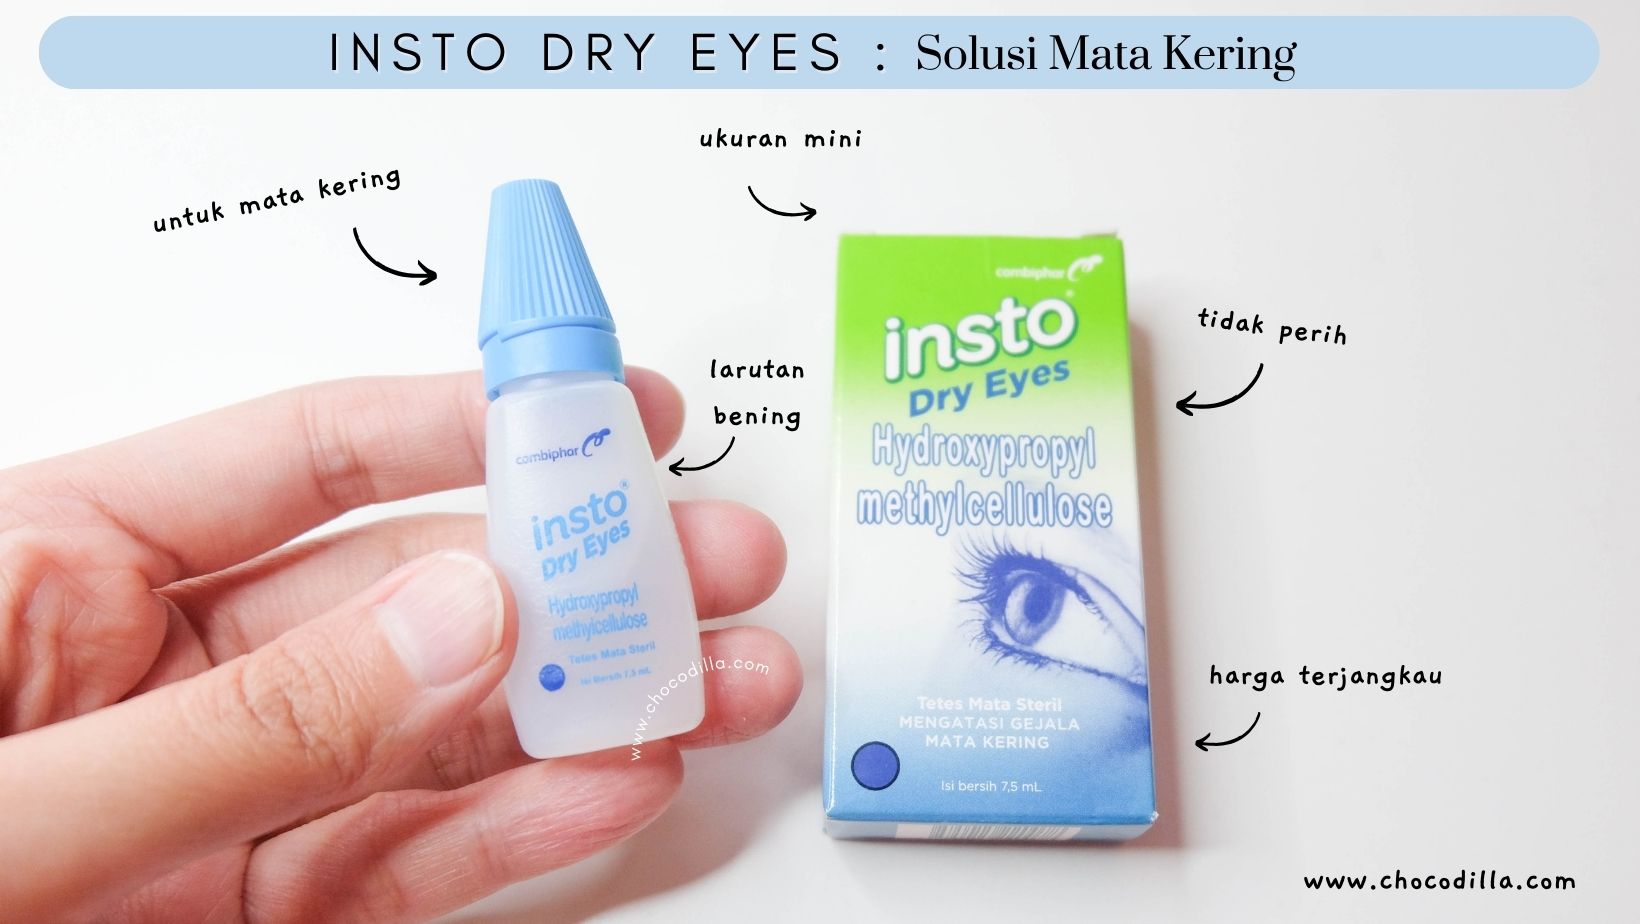 Insto Dry Eyes : Solusi Mata Kering karena Menatap Layar Gawai Terlalu Lama